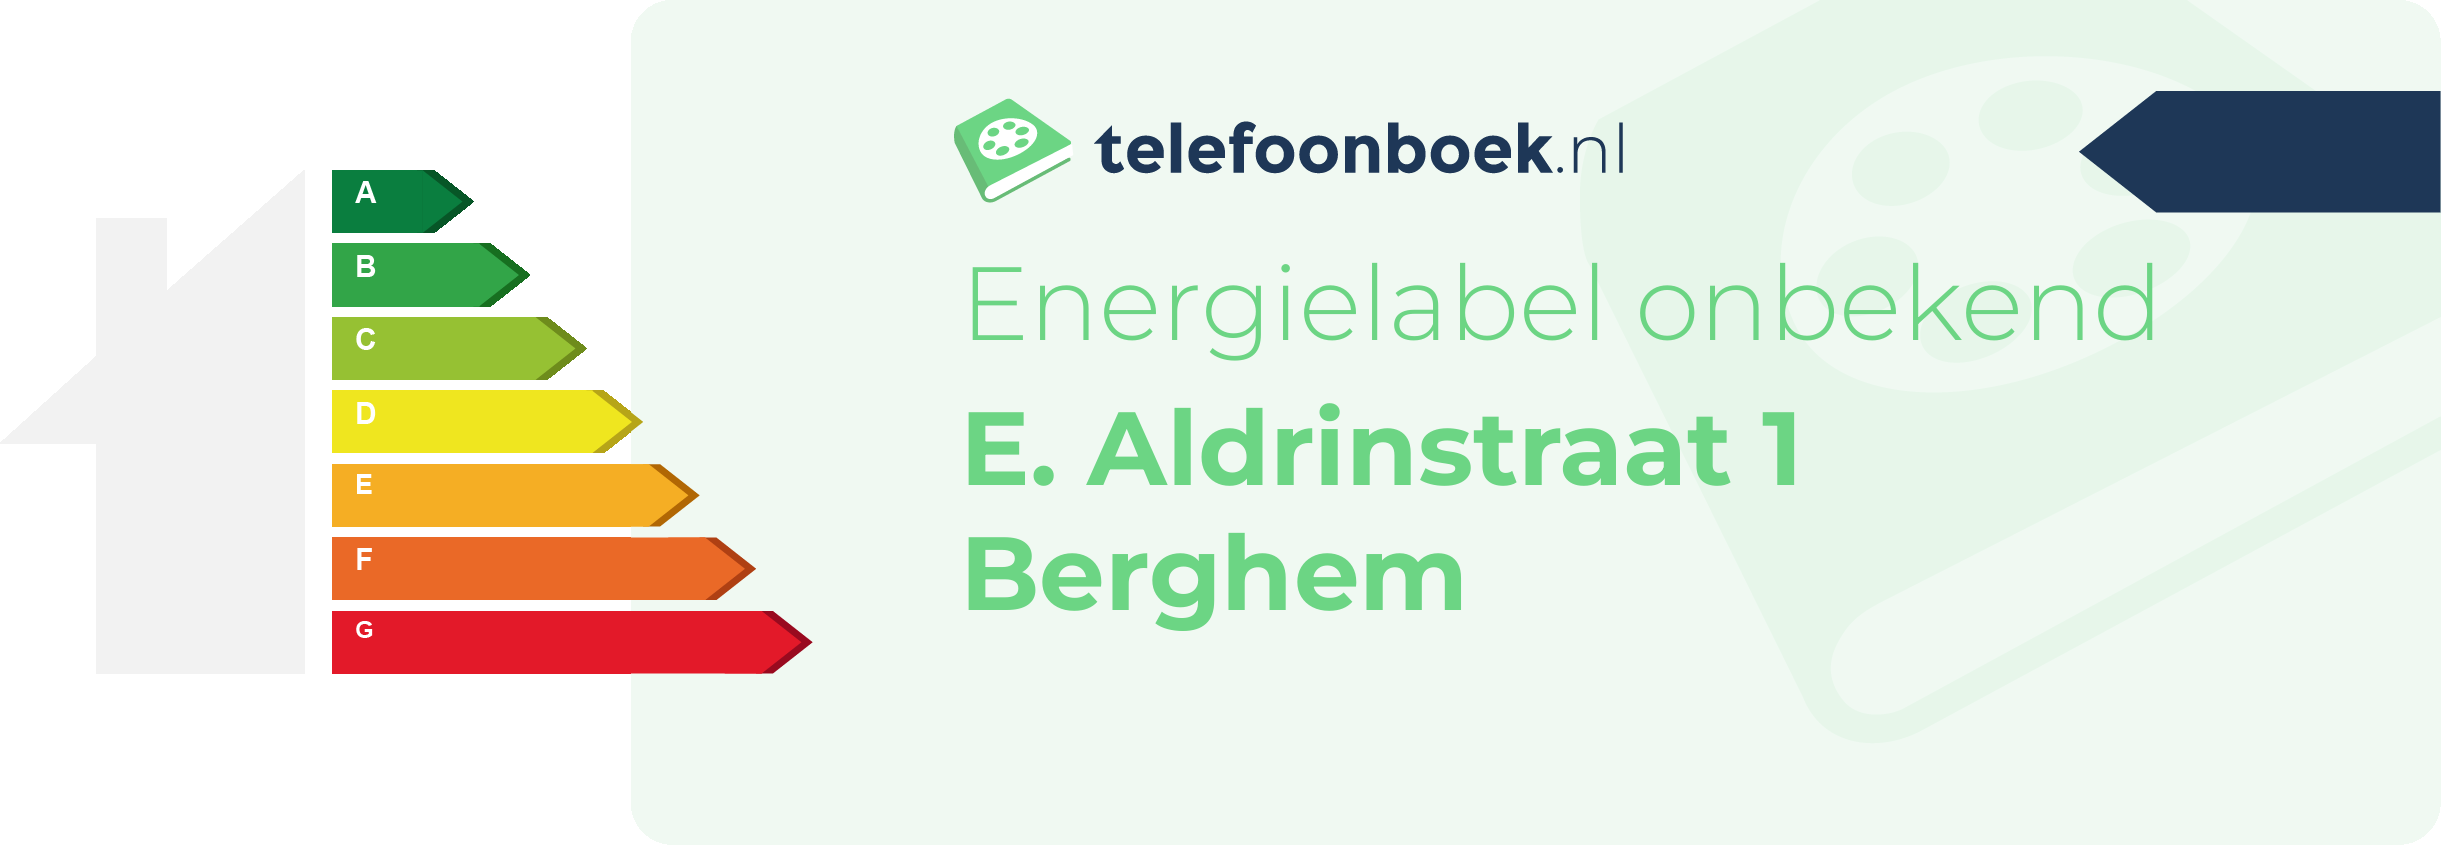 Energielabel E. Aldrinstraat 1 Berghem